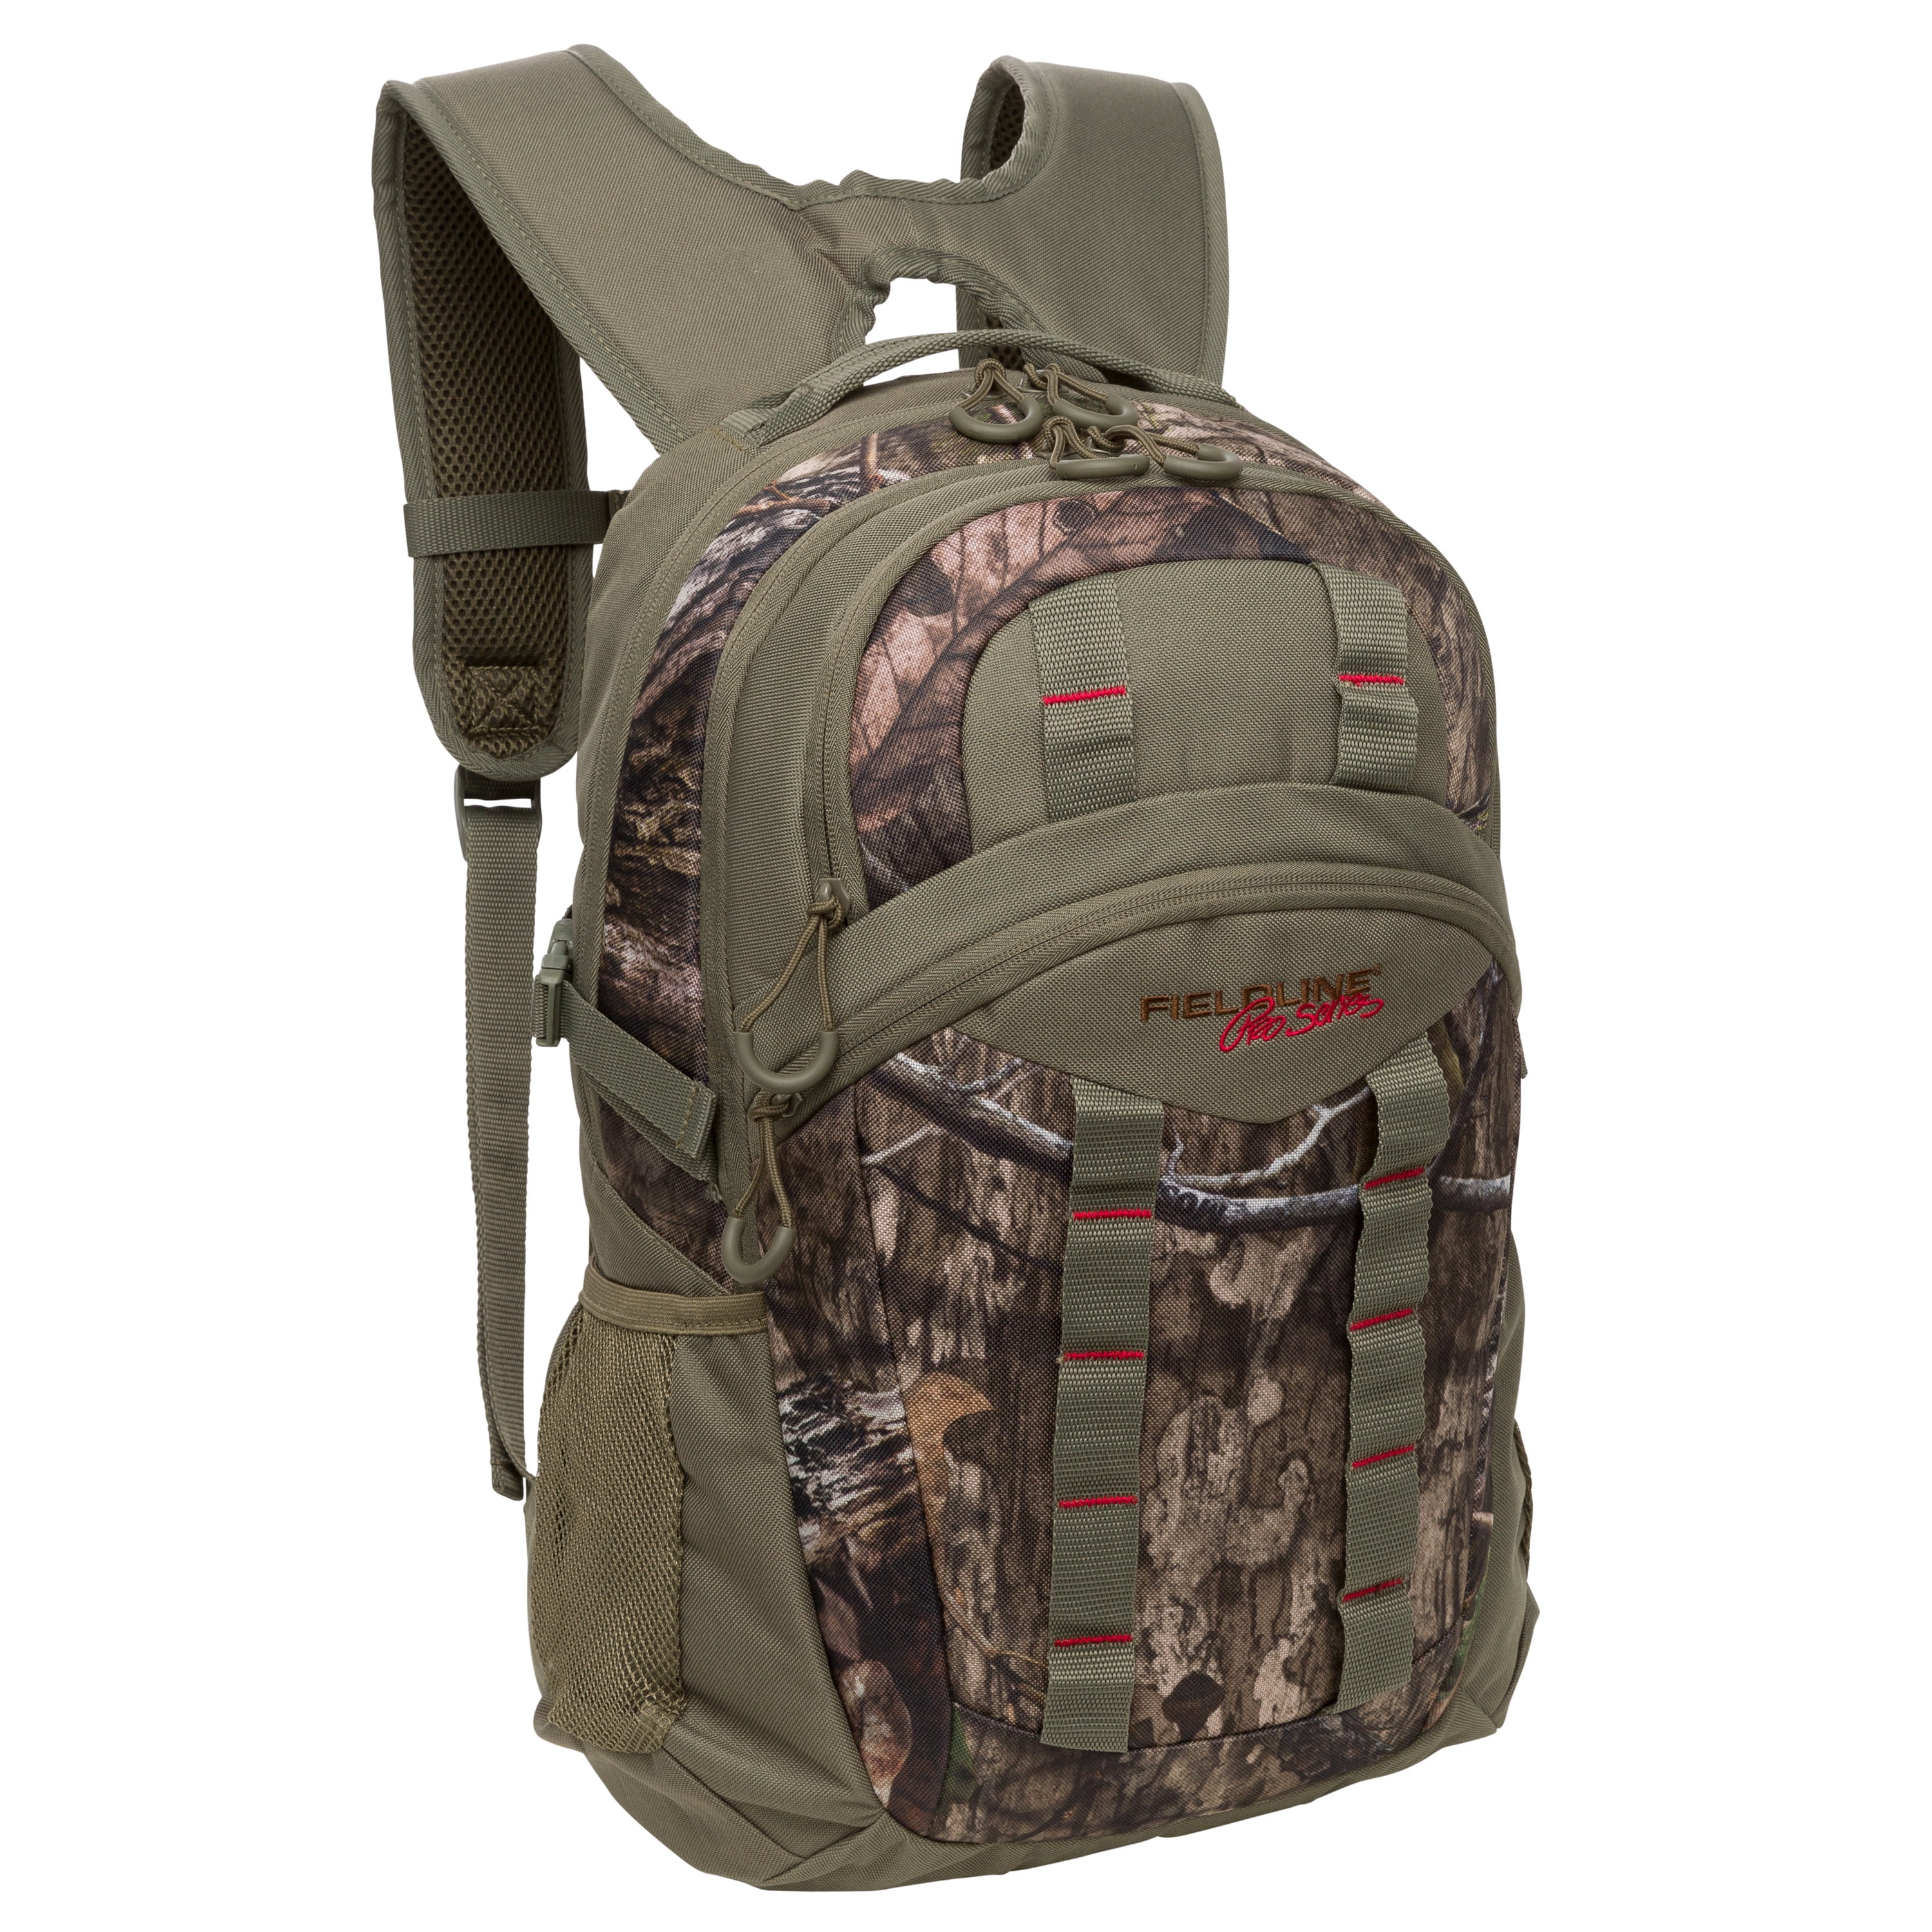 Fieldline Pro Series Pro Hunting Backpack Reatlree Edge Camouflage Hiking Camp 